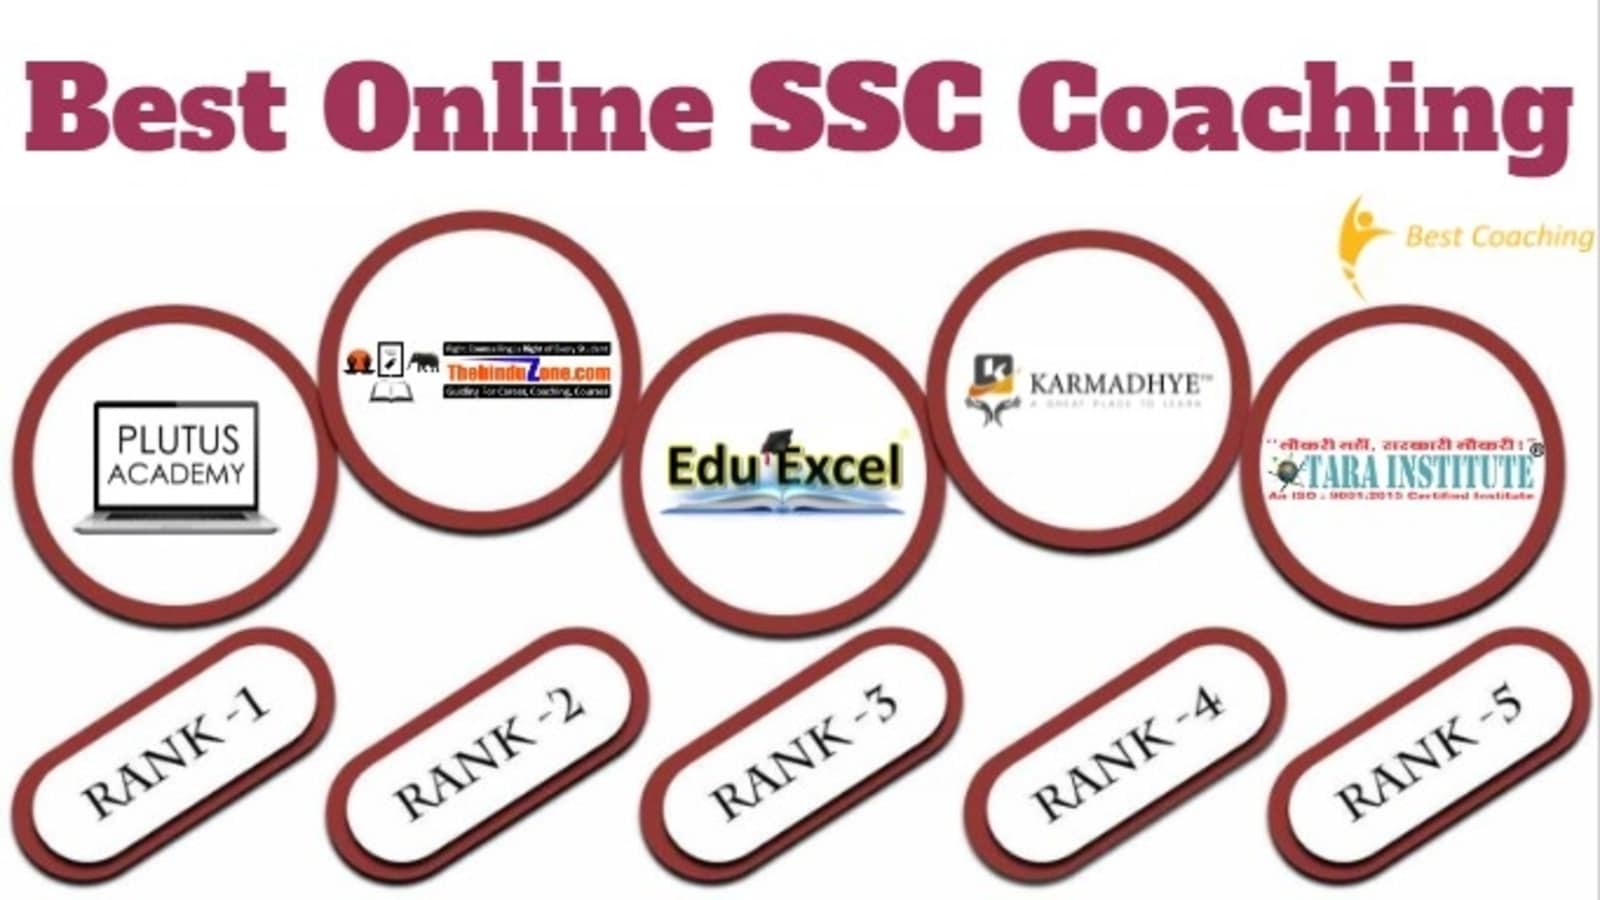 Best Online SSC Coaching